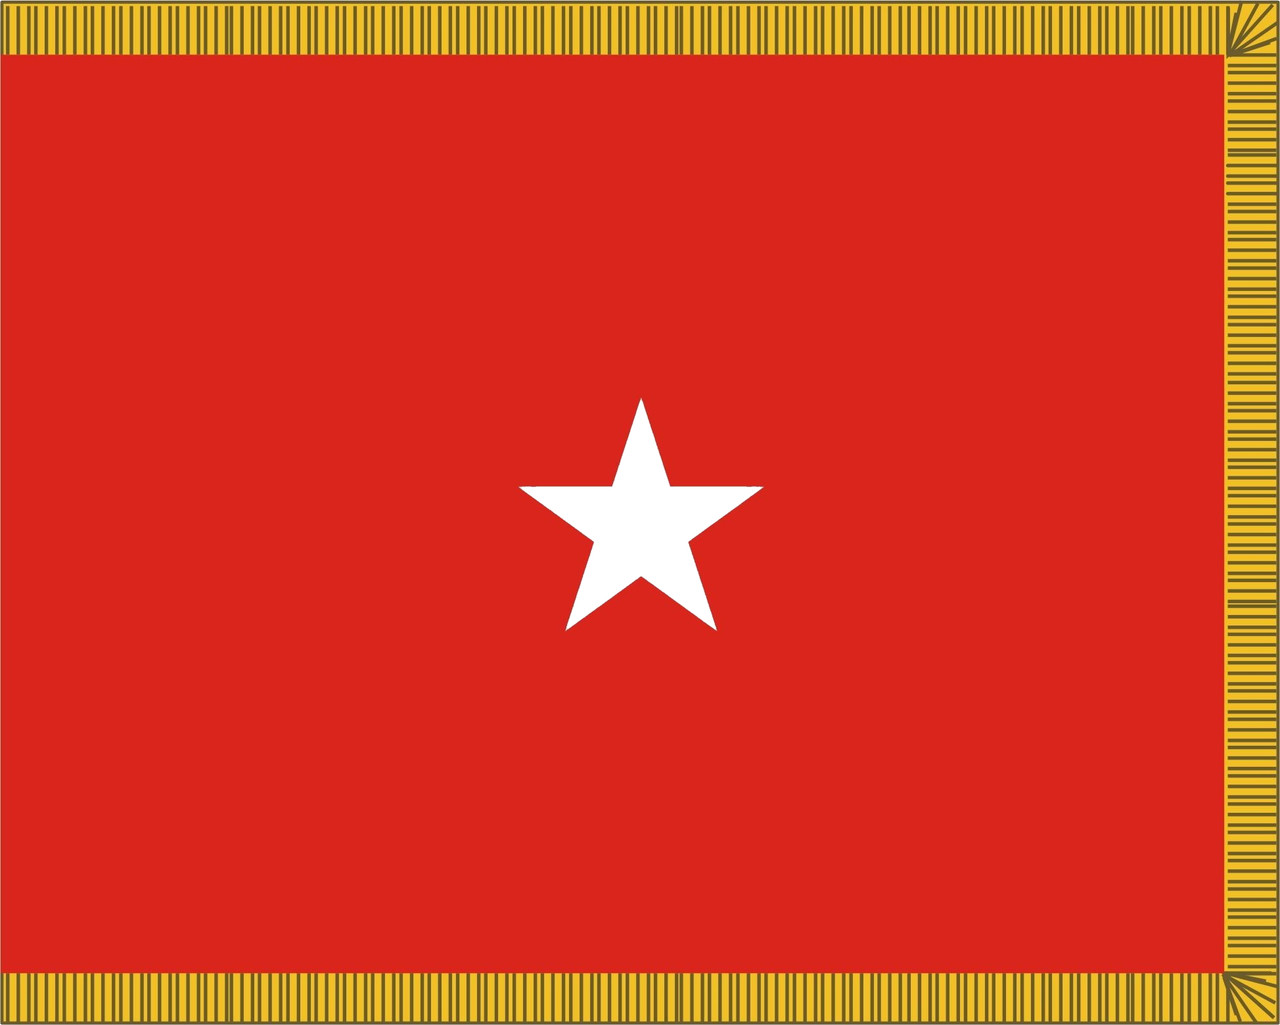 US Army Brigadier General Flag, 1 Star Nylon Applique with Pole Hem and Gold Fringe, Size 4'4" x 5'6", GAR1104054